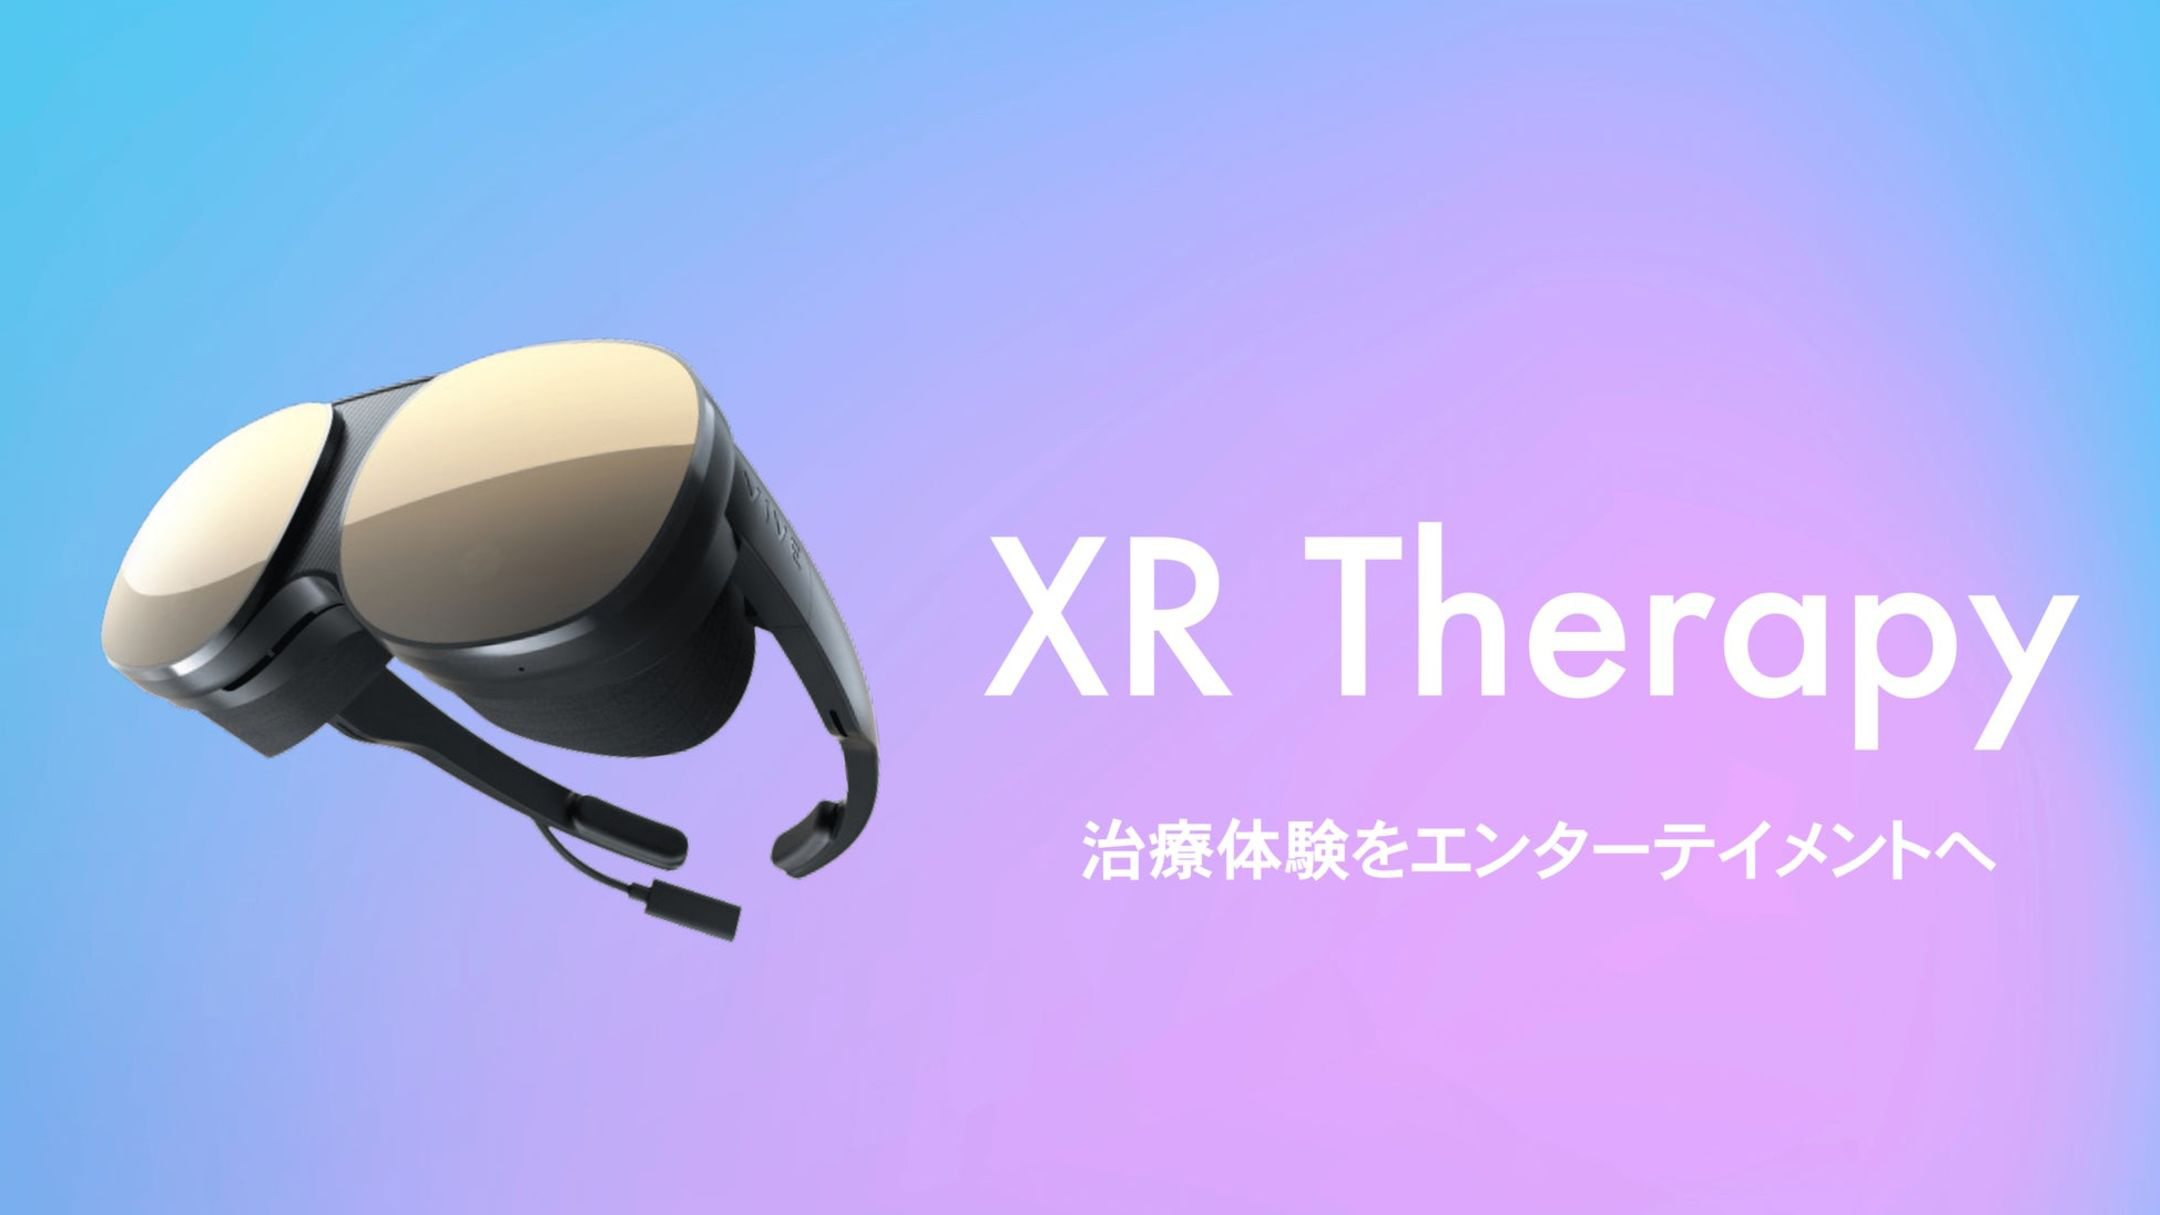 VRの力で患者の痛みや不安を軽減する“デジタル鎮痛アプリ”